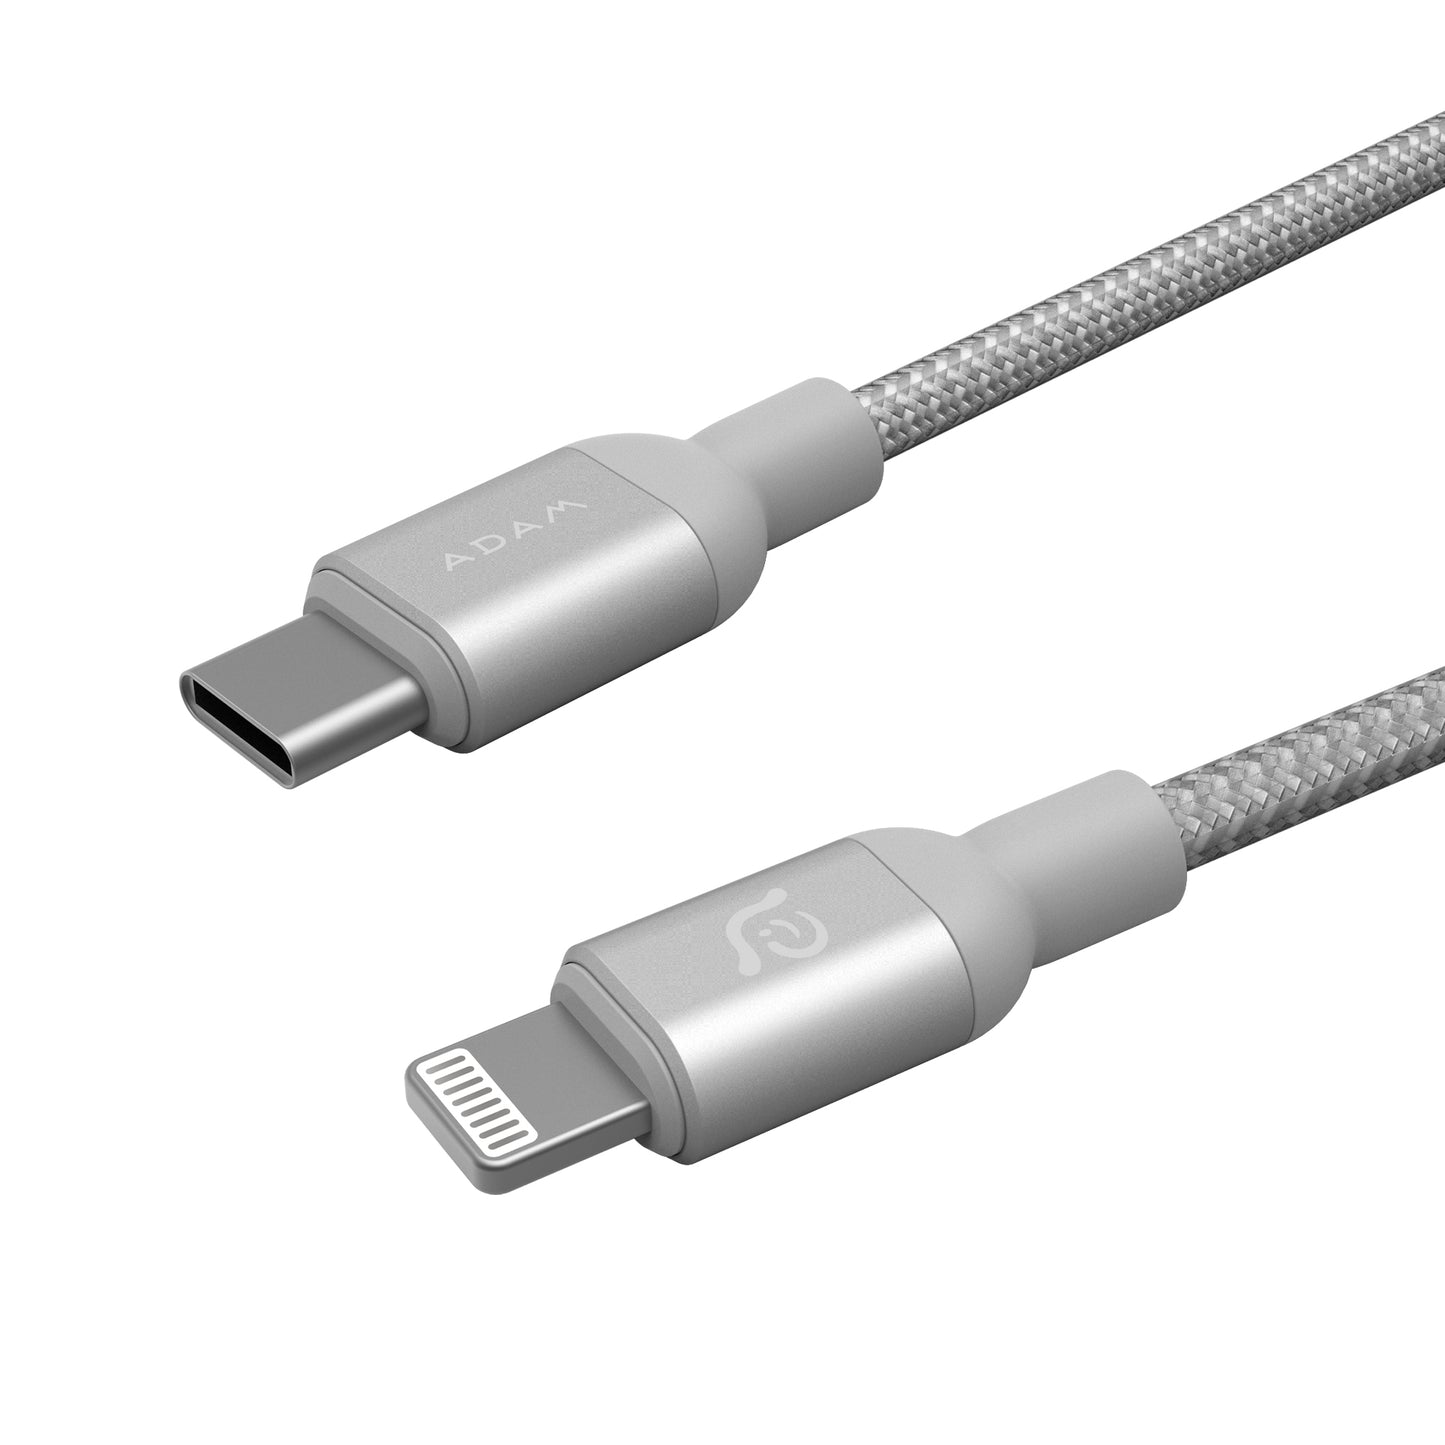 ADAM ELEMENTS PeAk II C200B USB-C to Lightning Cable 2m - Silver